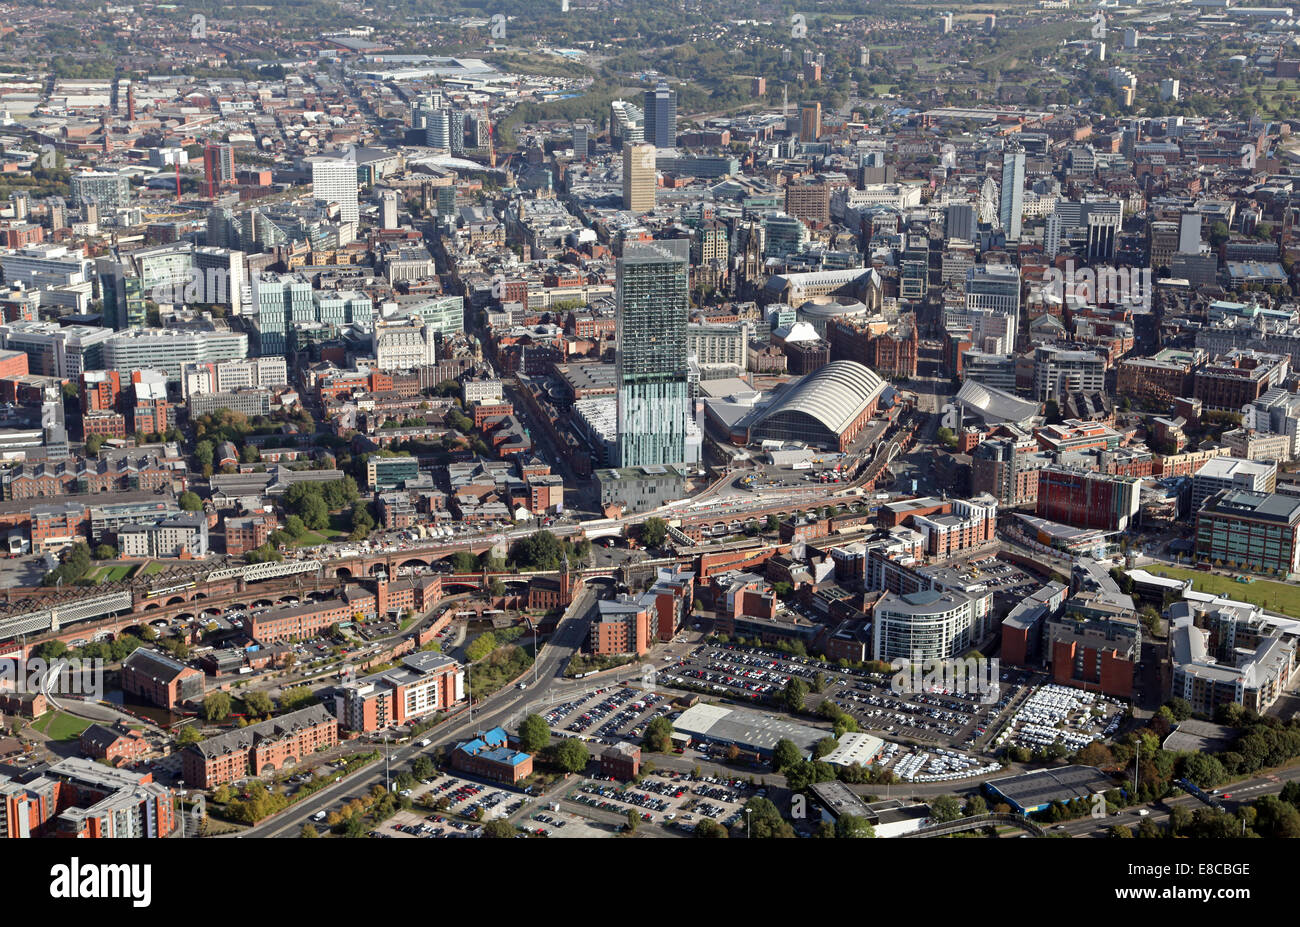 Vista aérea del centro de la ciudad de Manchester Foto de stock